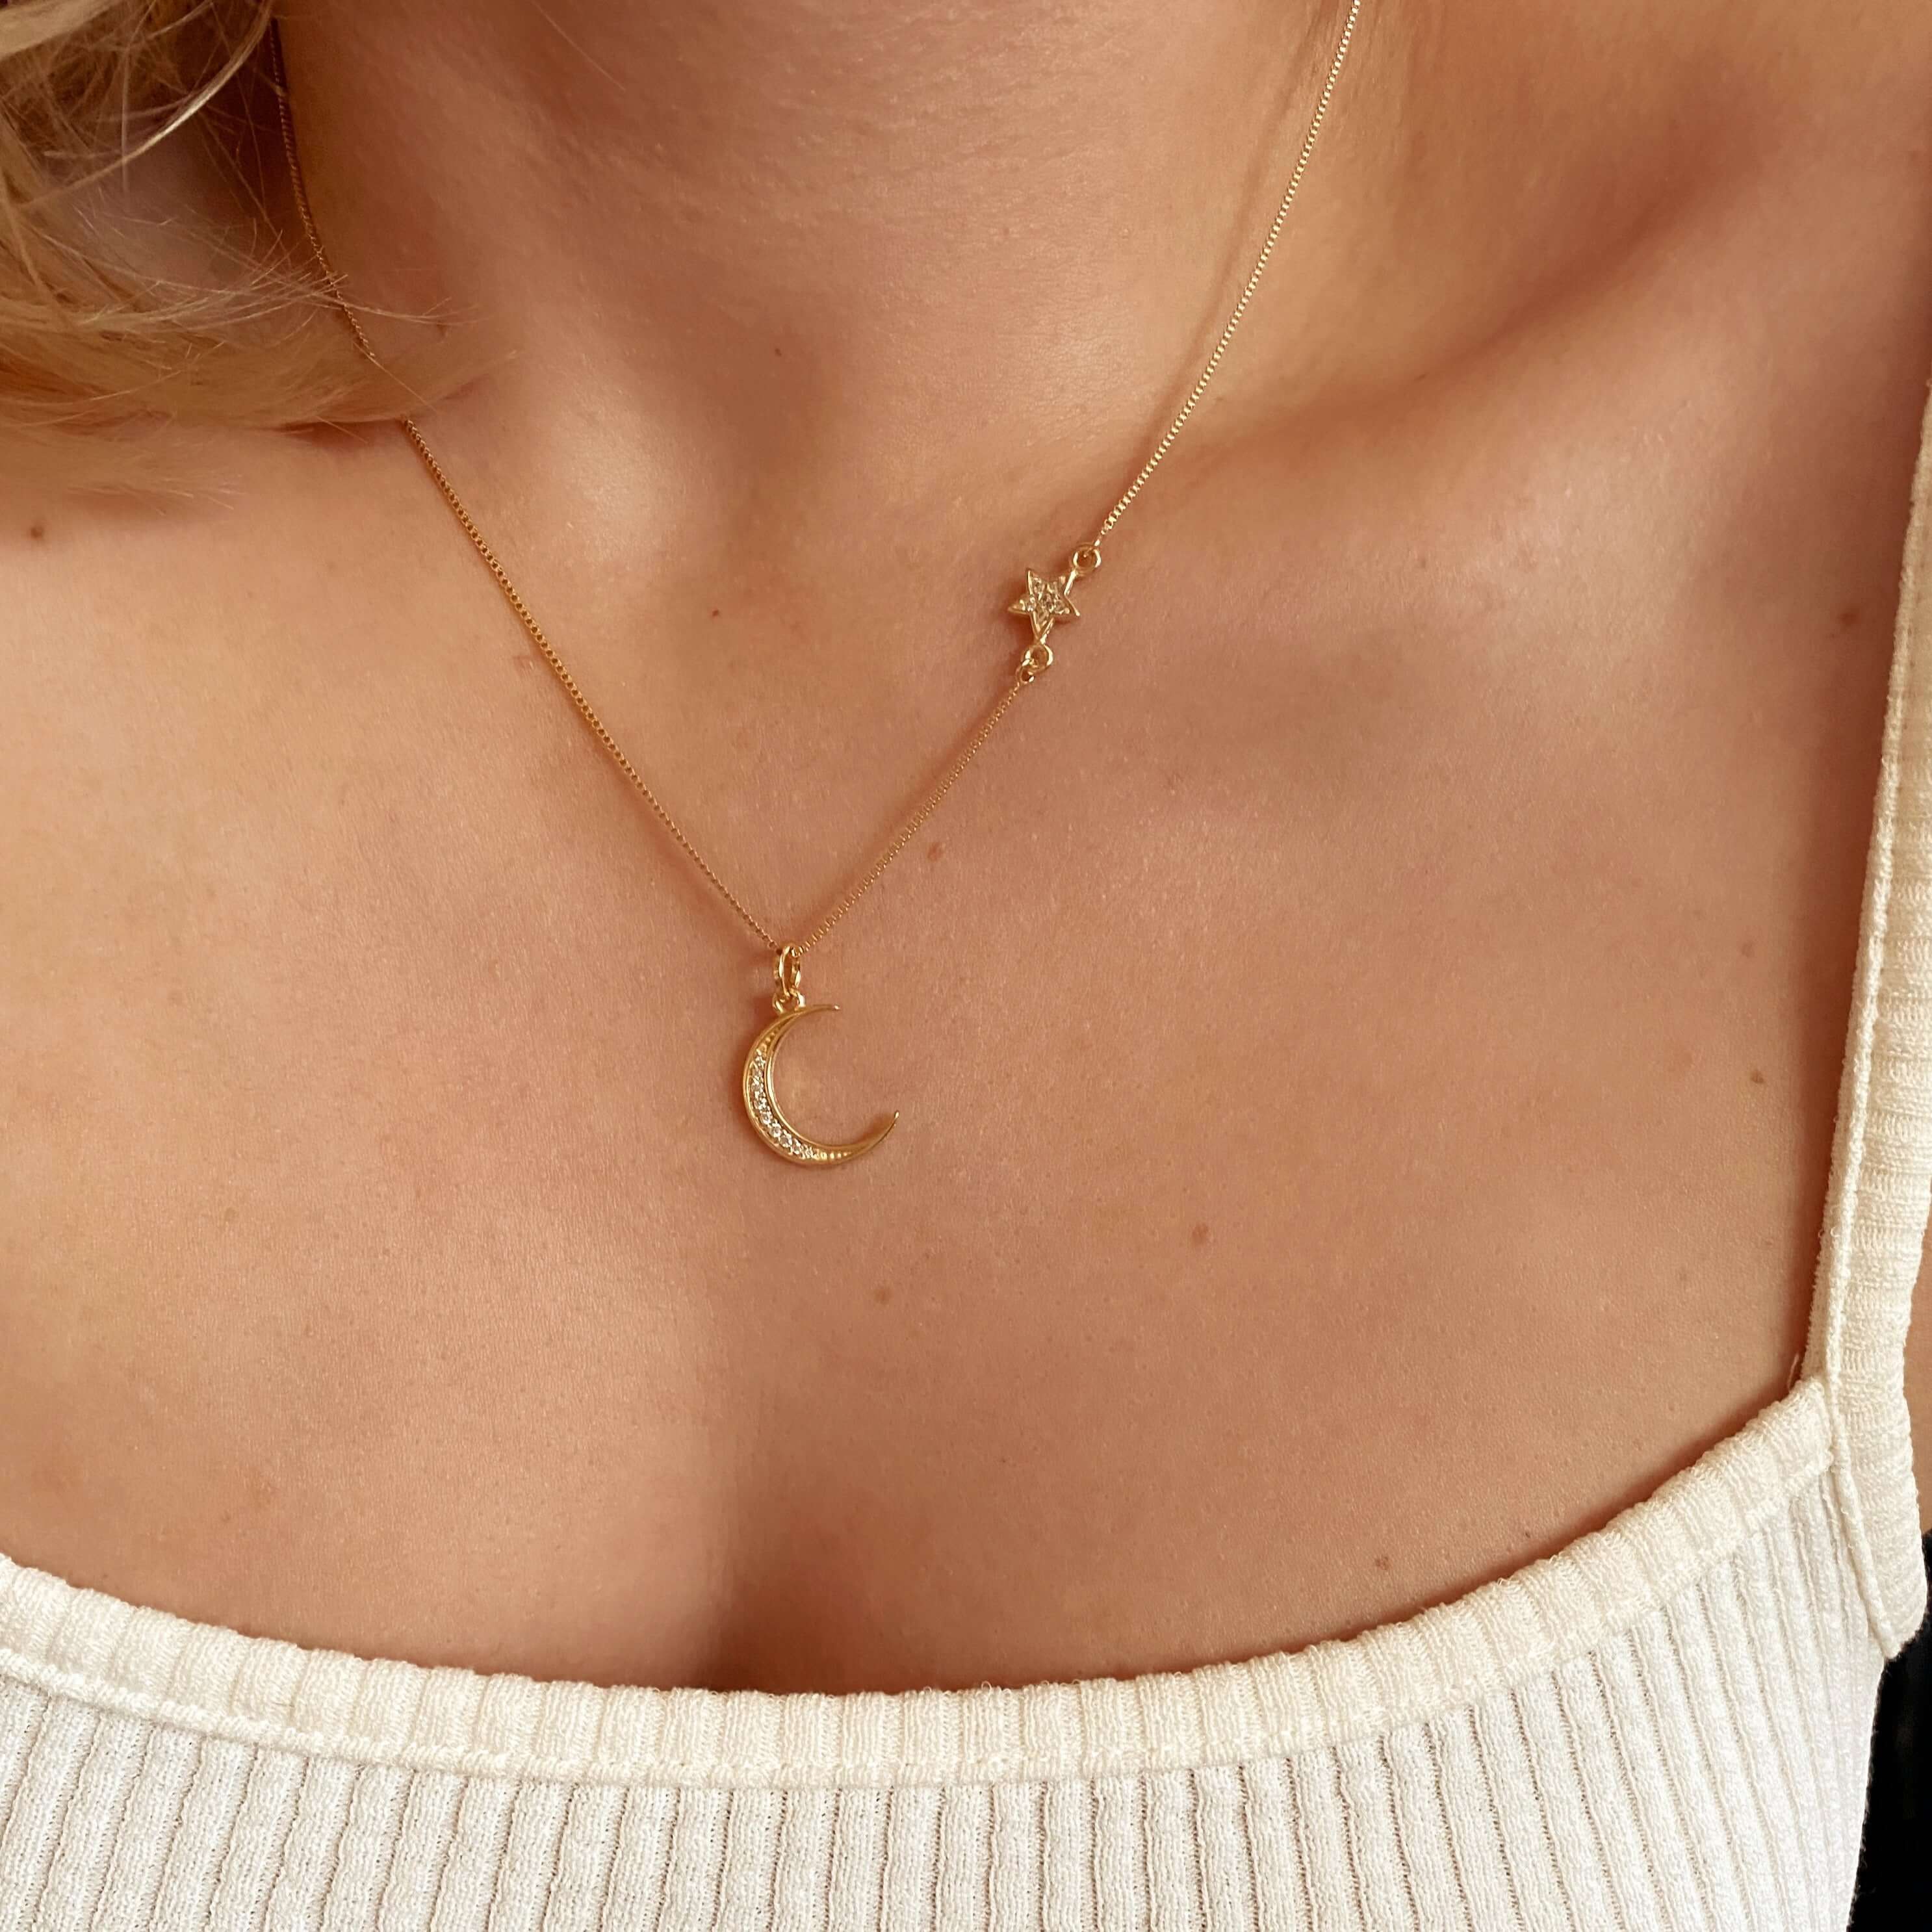 Celestial North Star & Moon Gold Necklace | Olivia Burton London